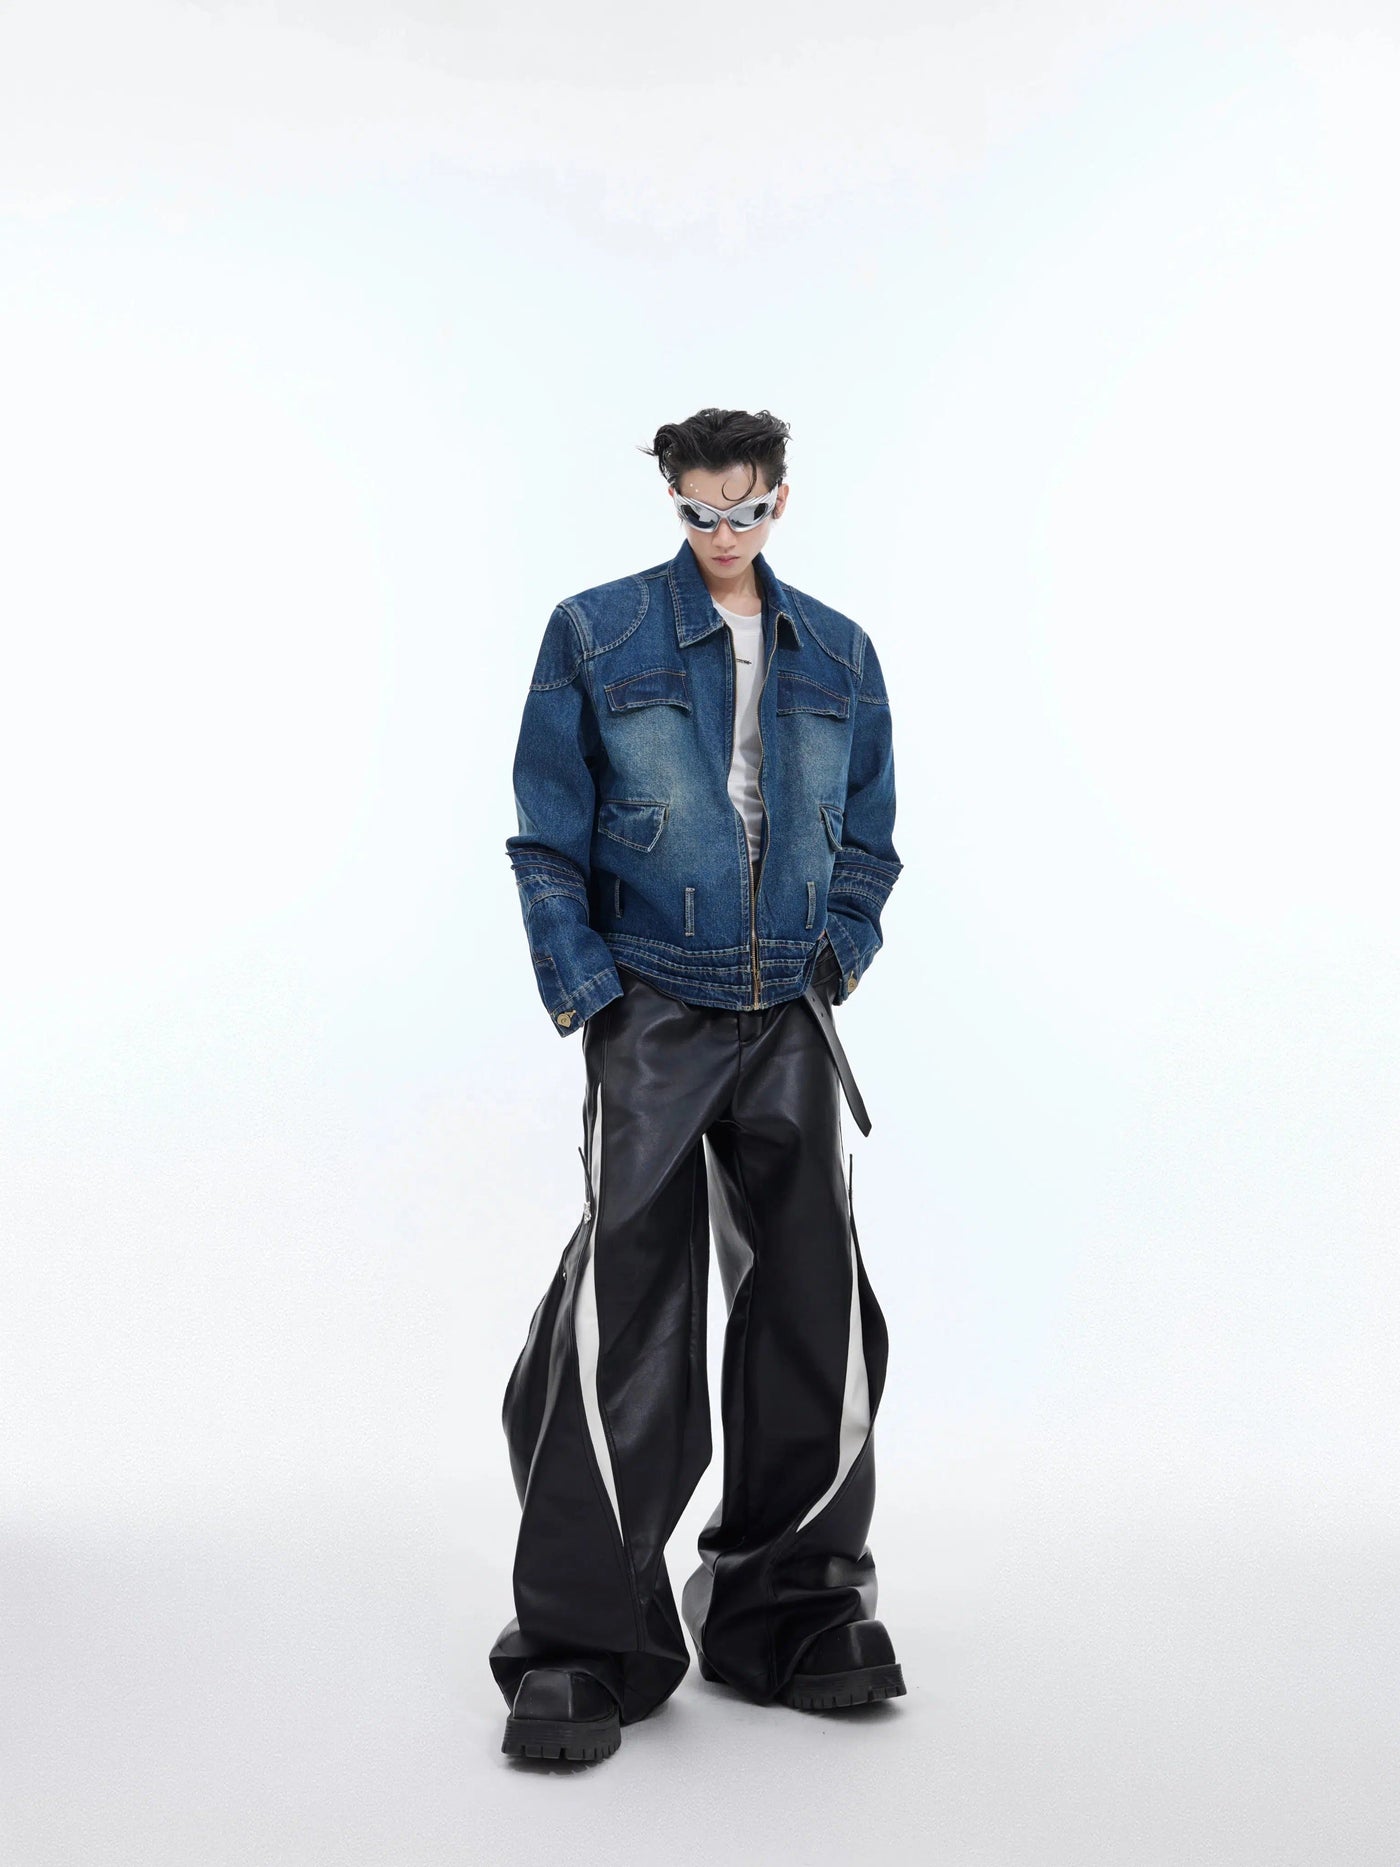 Abstract Seams Denim Jacket Korean Street Fashion Jacket By Argue Culture Shop Online at OH Vault